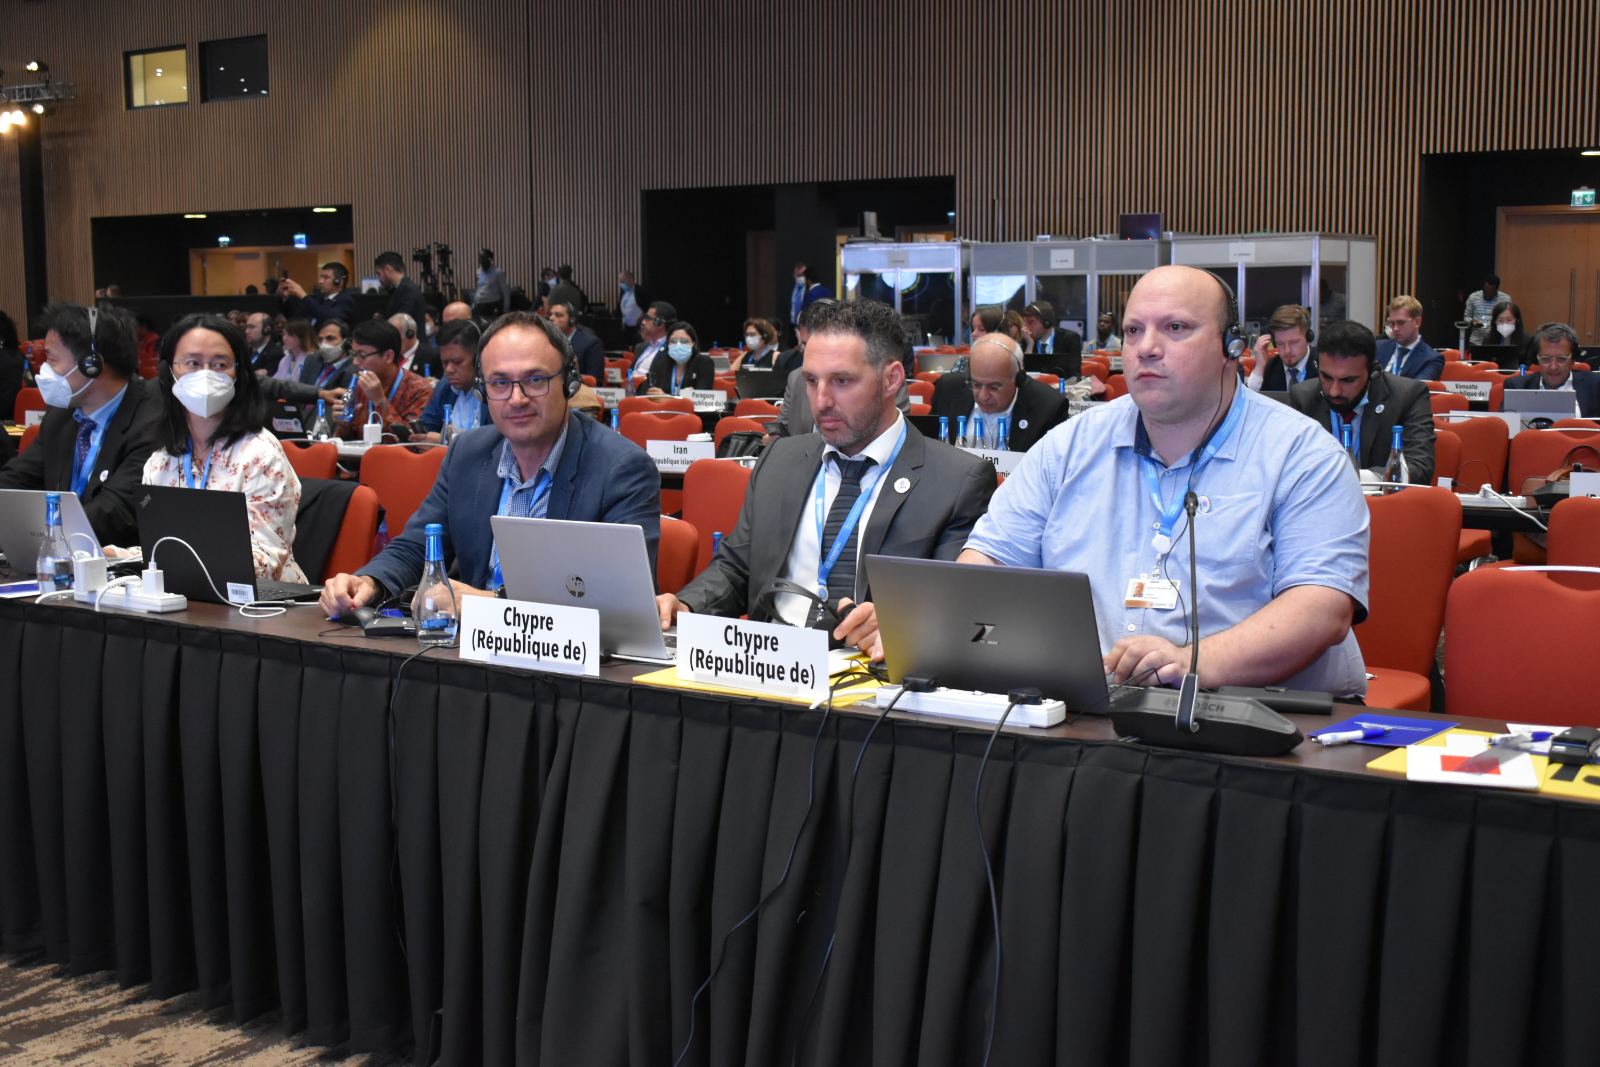 DSA Representation at the ITU World Telecommunications Development Conference